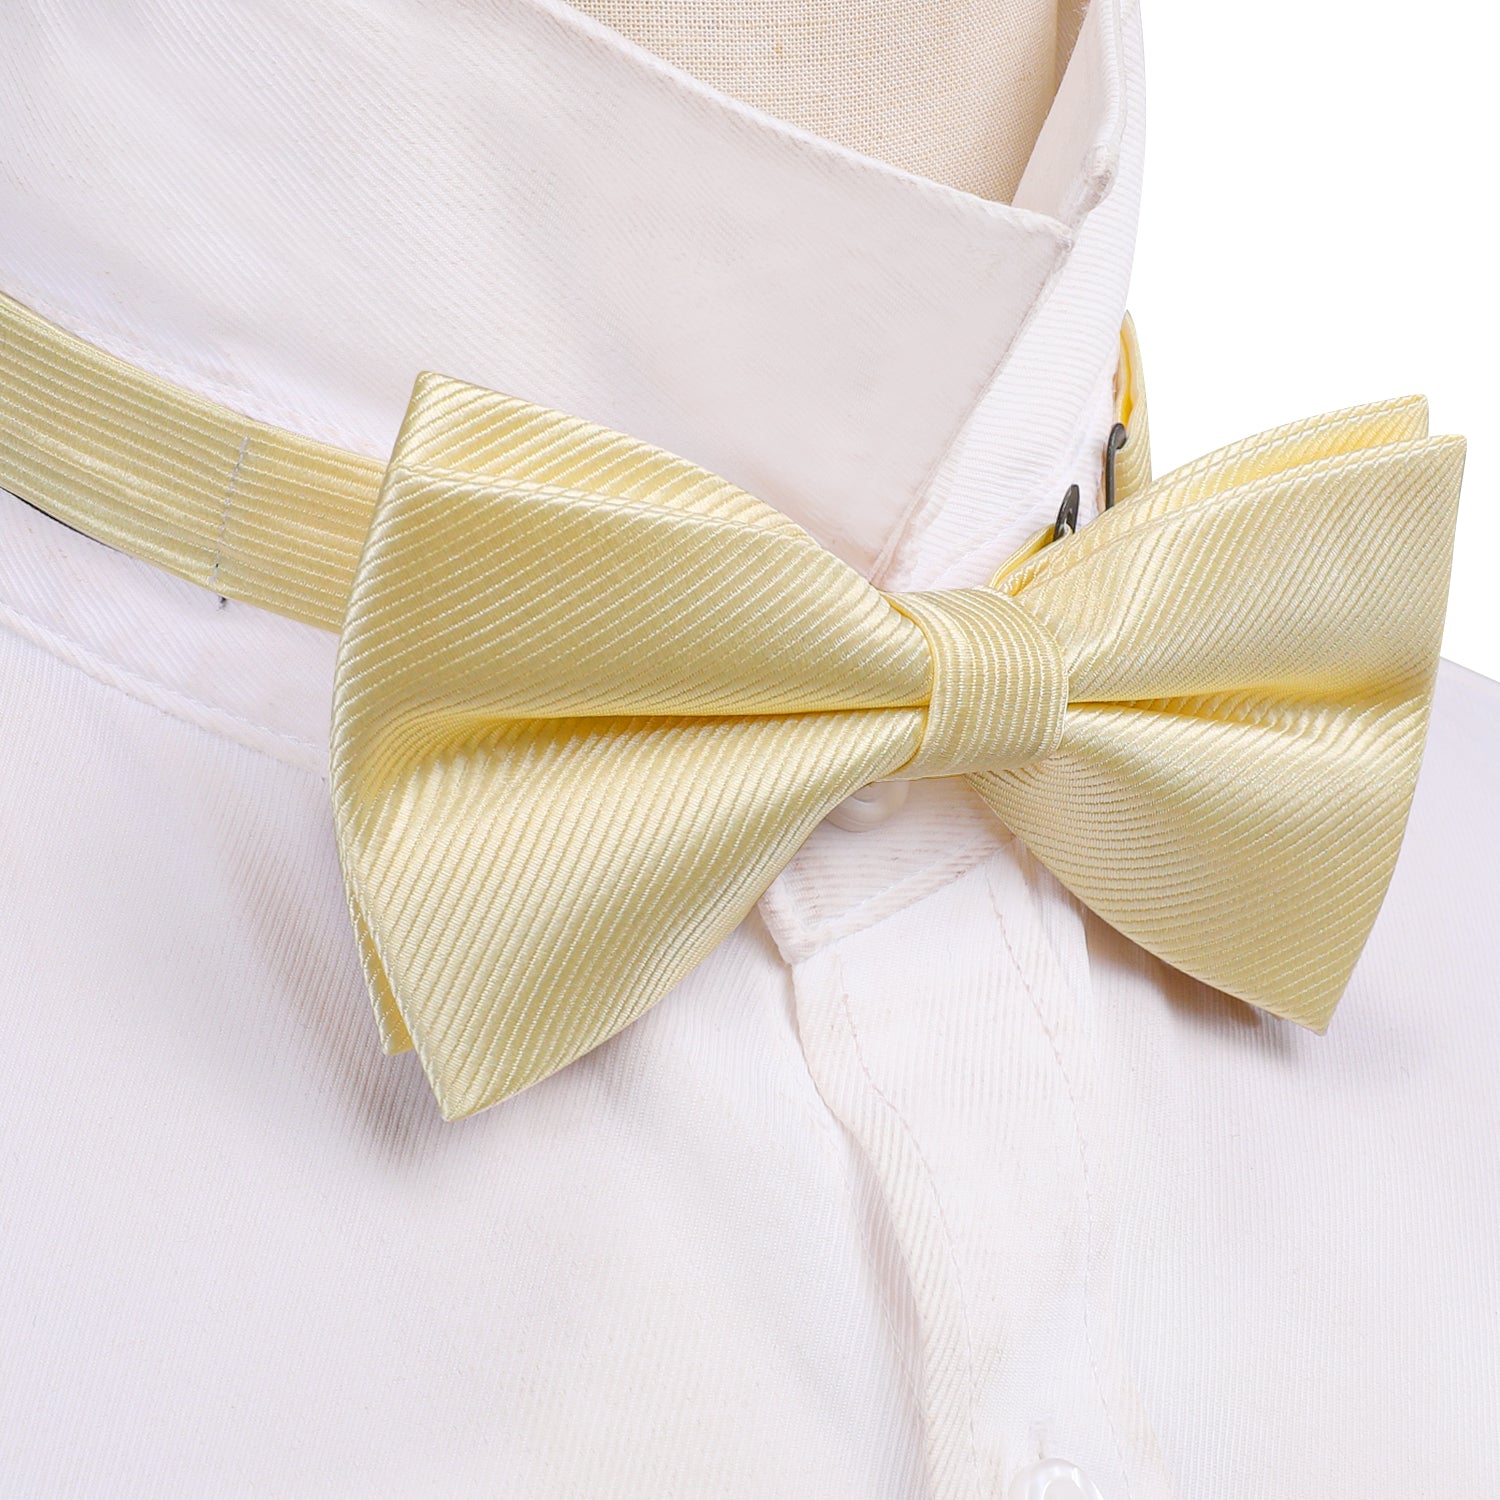 Lemon Chiffon Solid Pre-tied Bow Tie Hanky Cufflinks Set